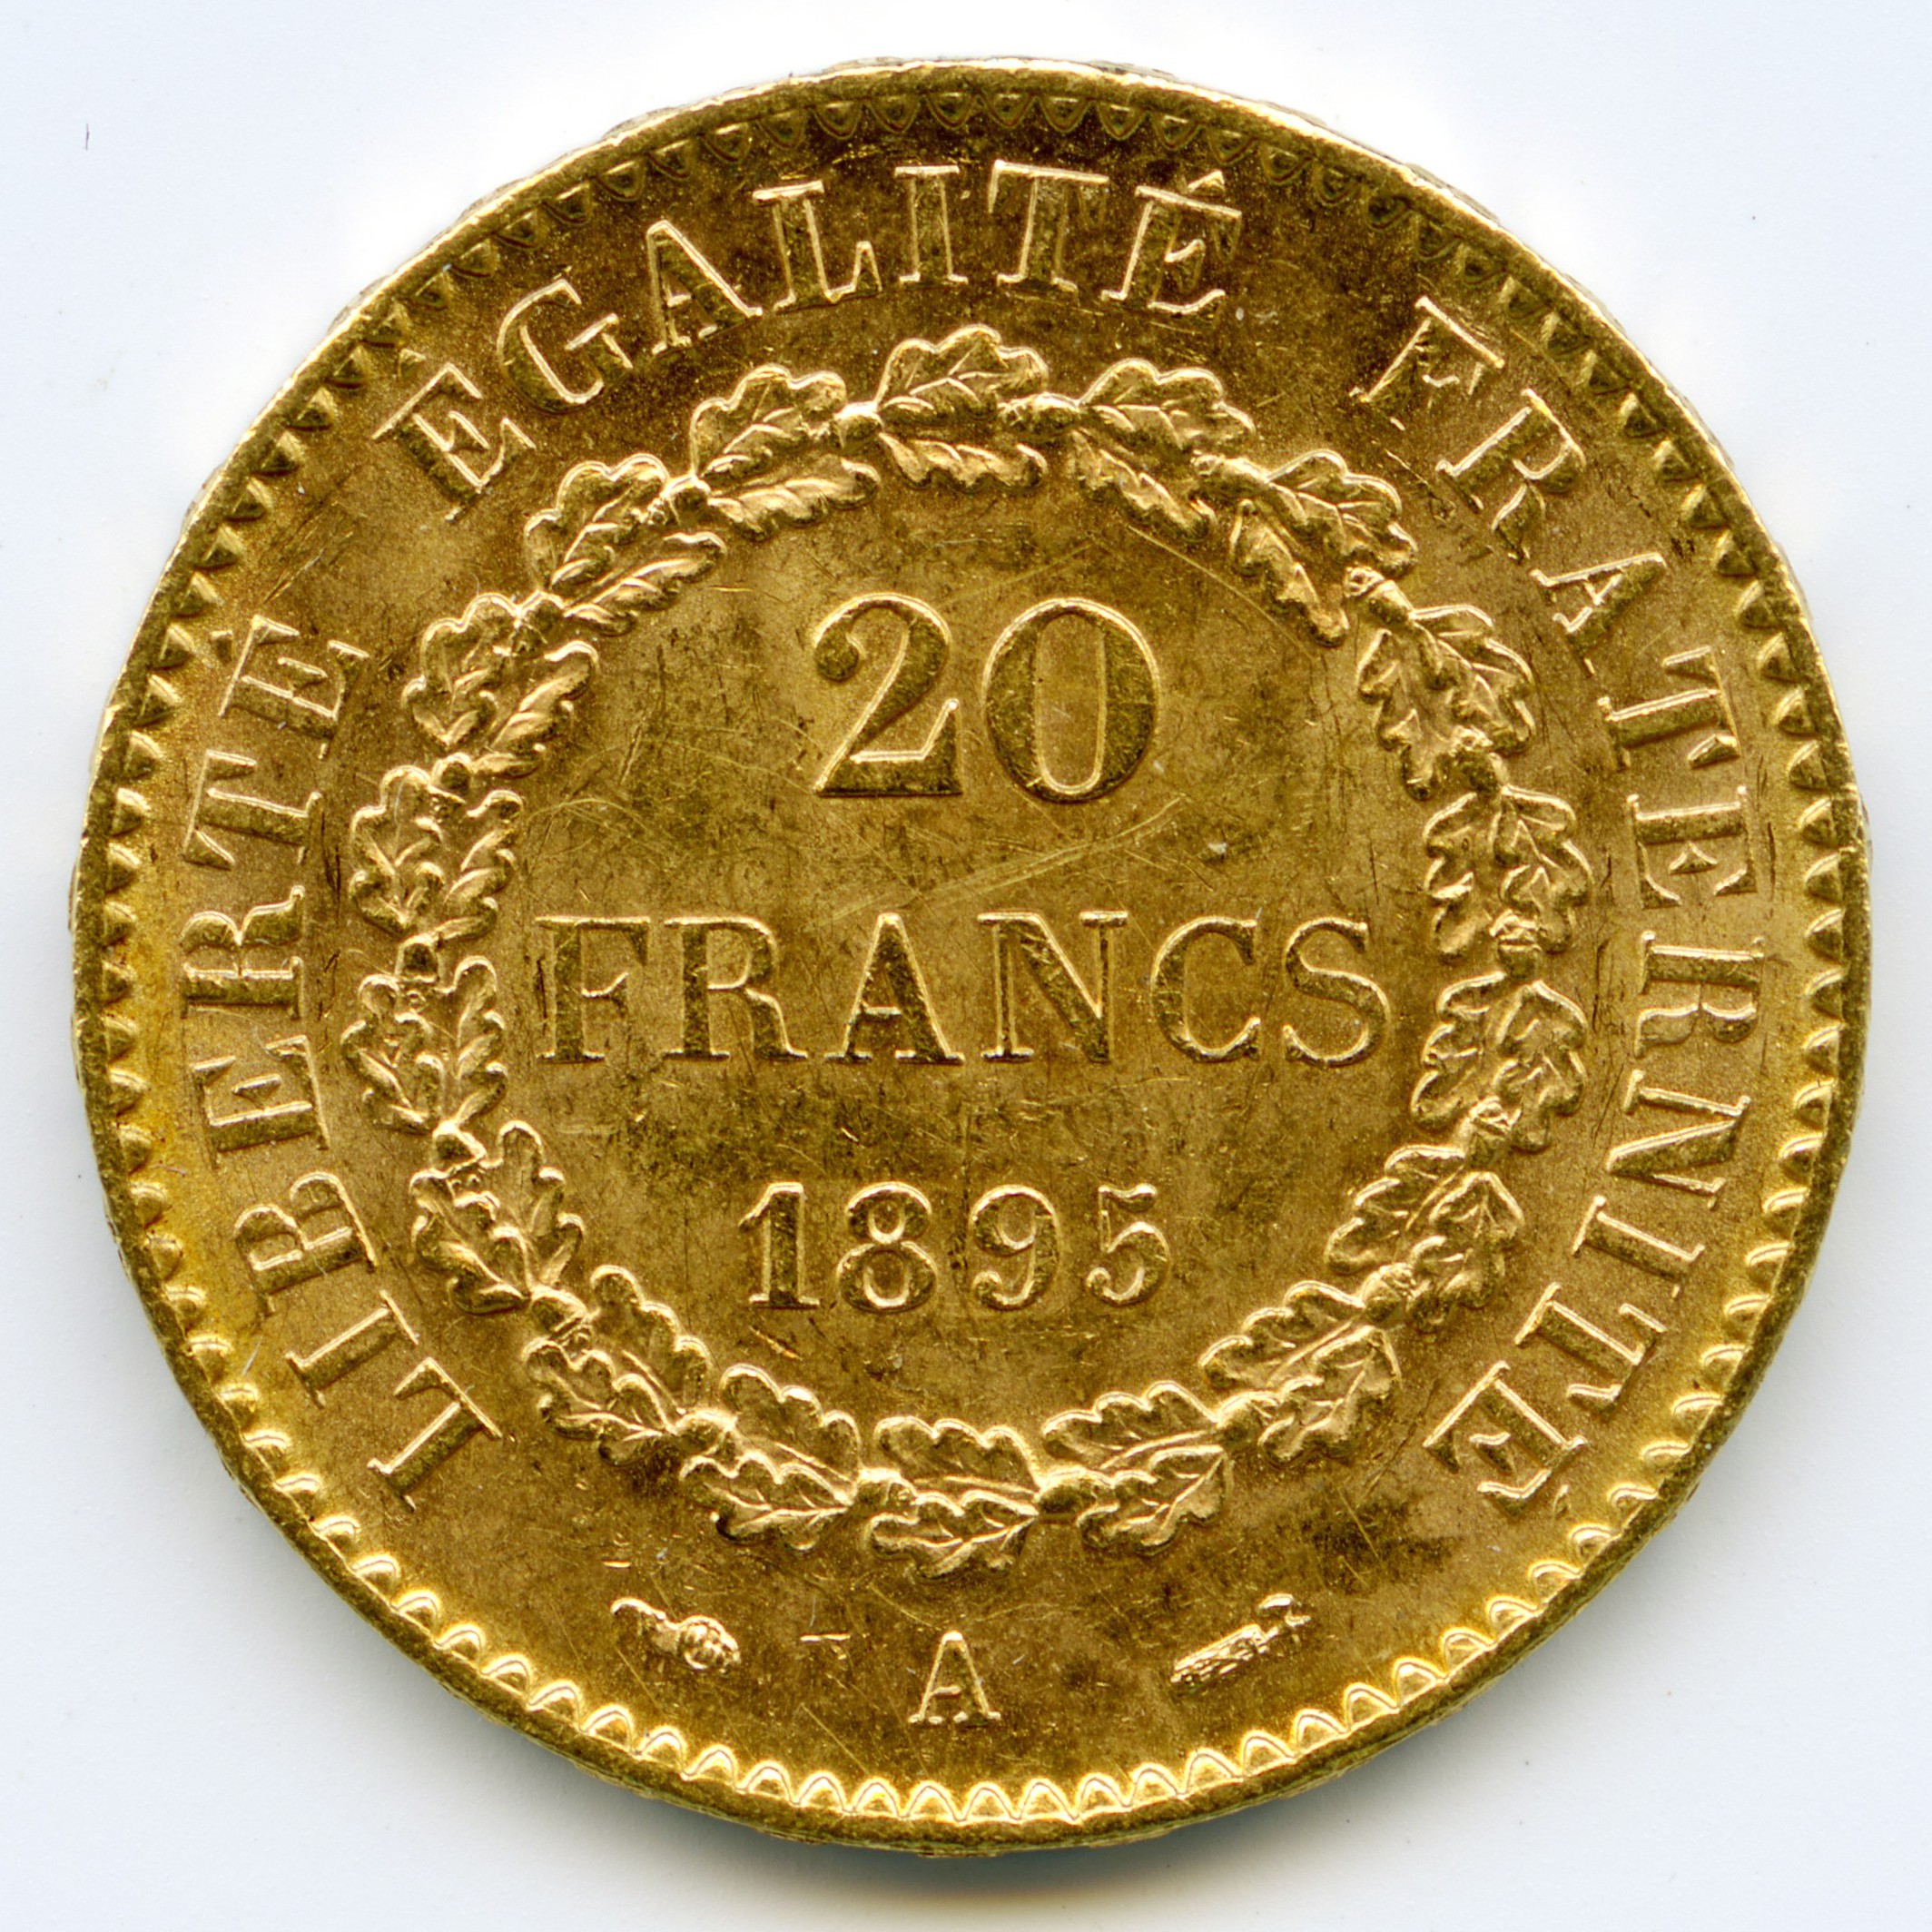 20 Francs - Génie - 1895 A revers